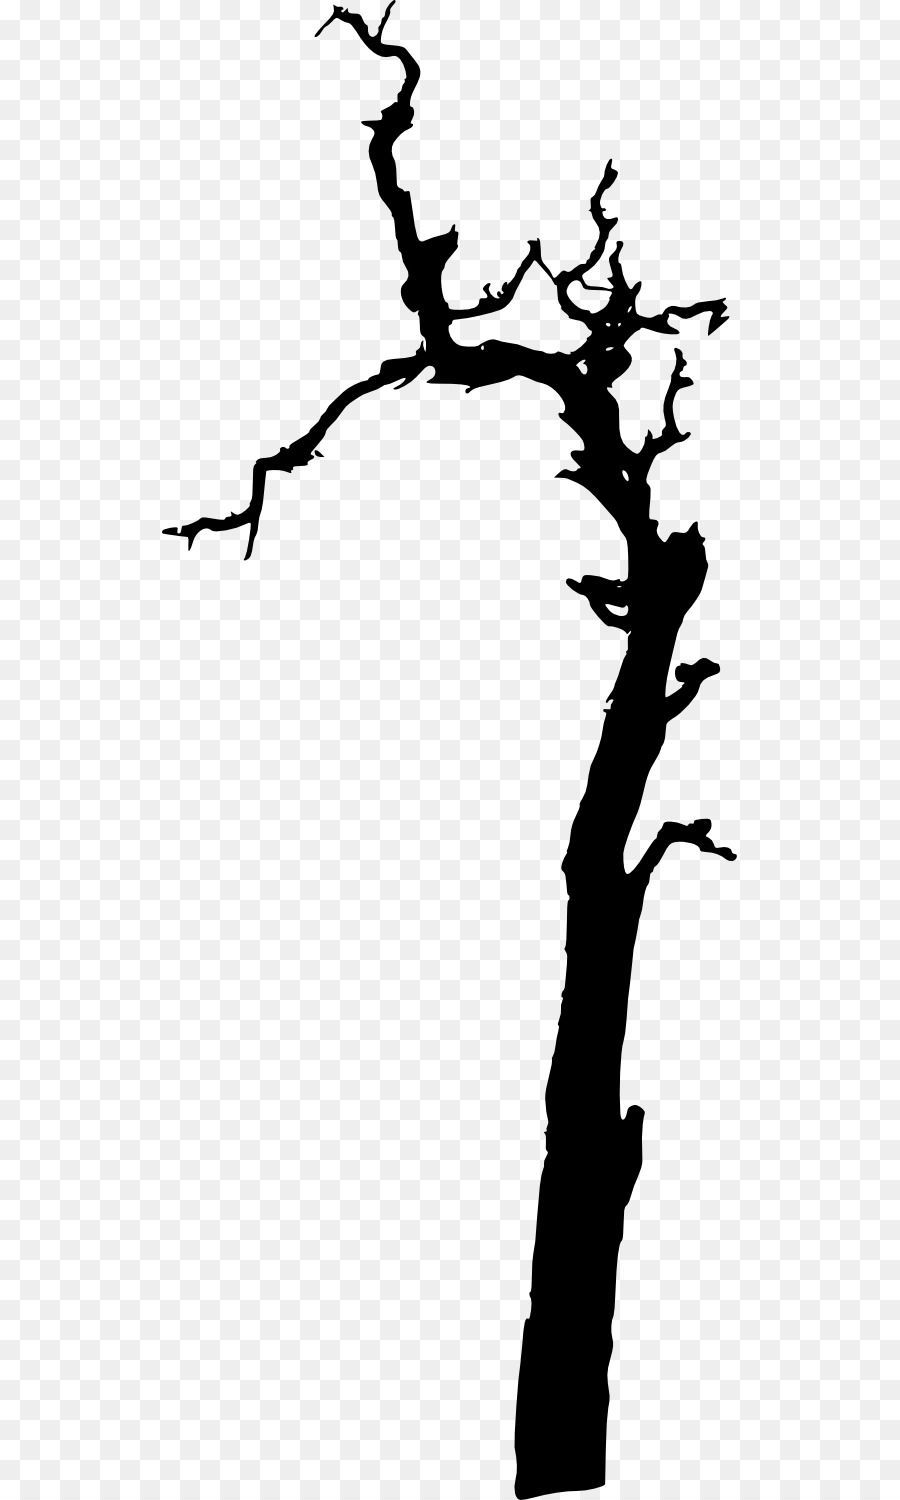 Twig Clip art - silhouette